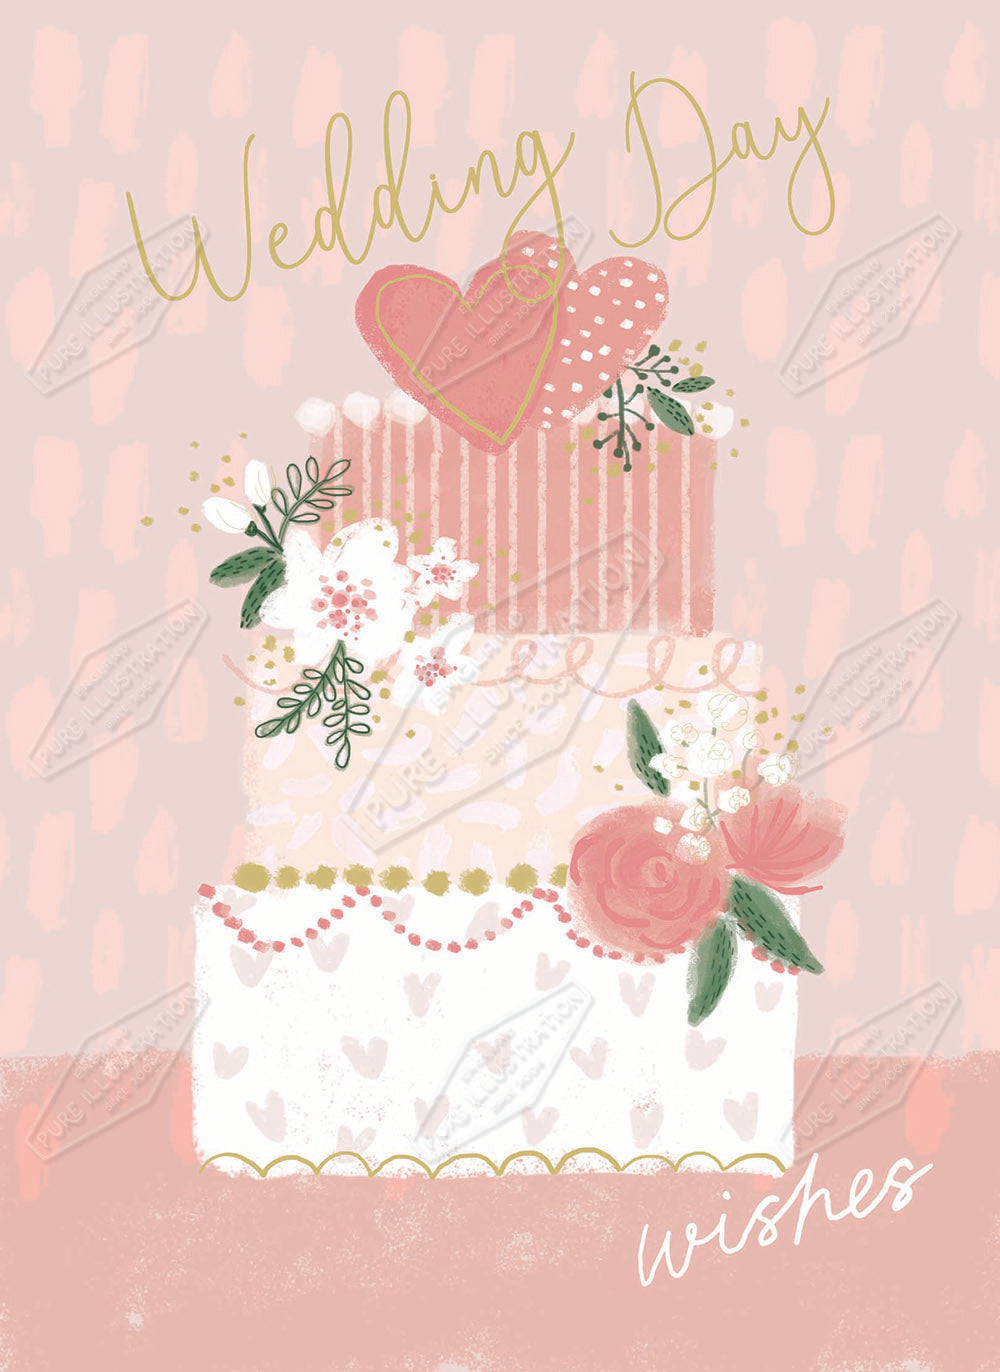 00034567SLA- Sarah Lake is represented by Pure Art Licensing Agency - Wedding Greeting Card Design